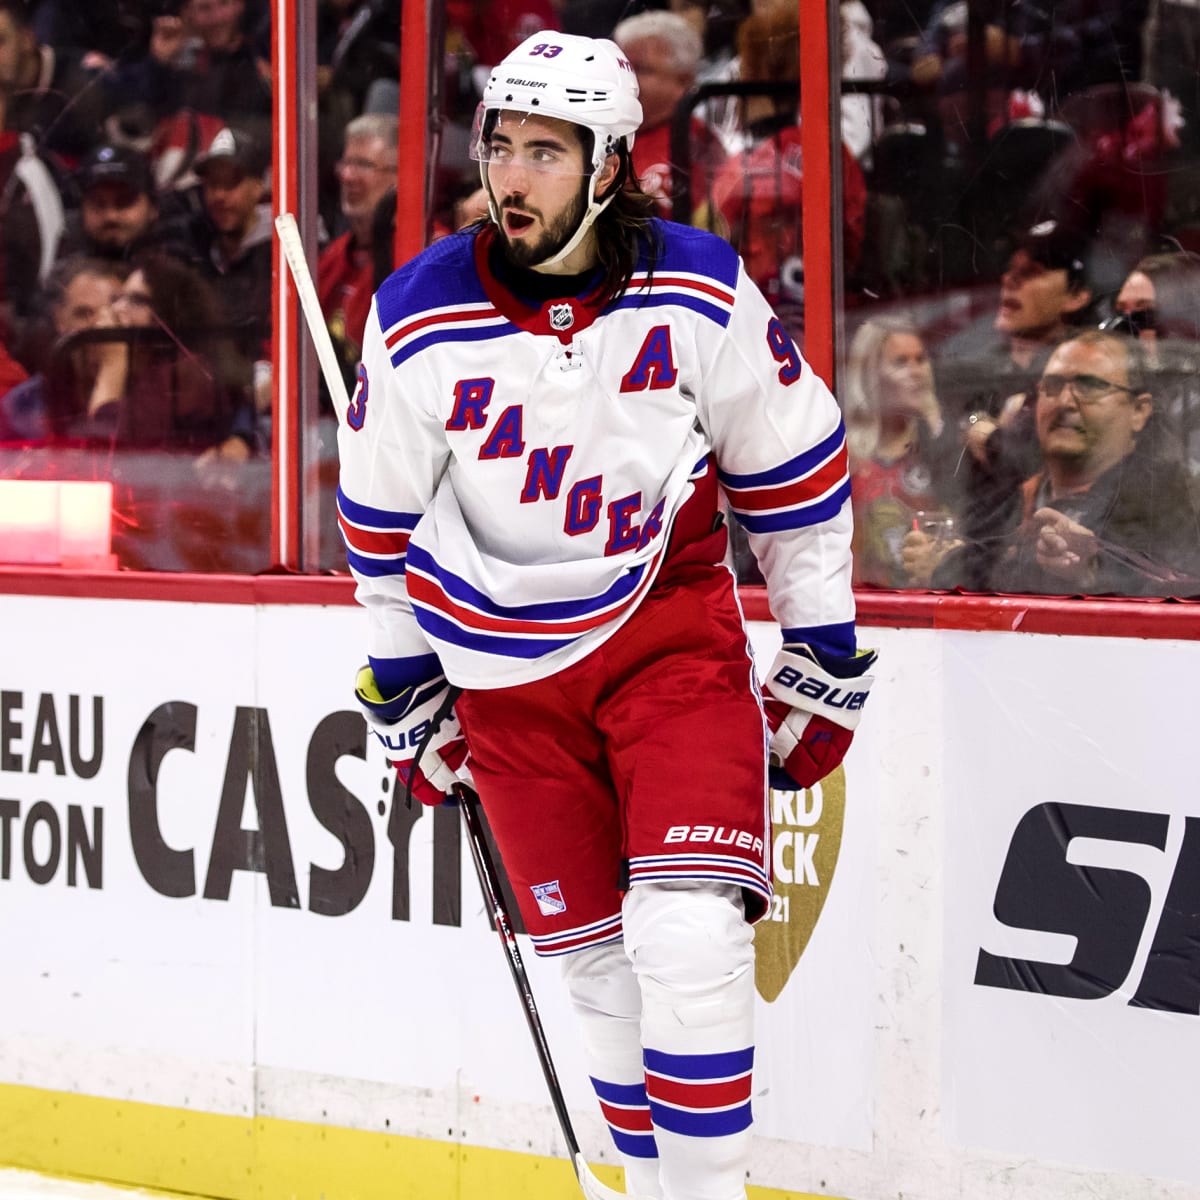 Mika Zibanejad leads Rangers past Lightning in NHL season opener